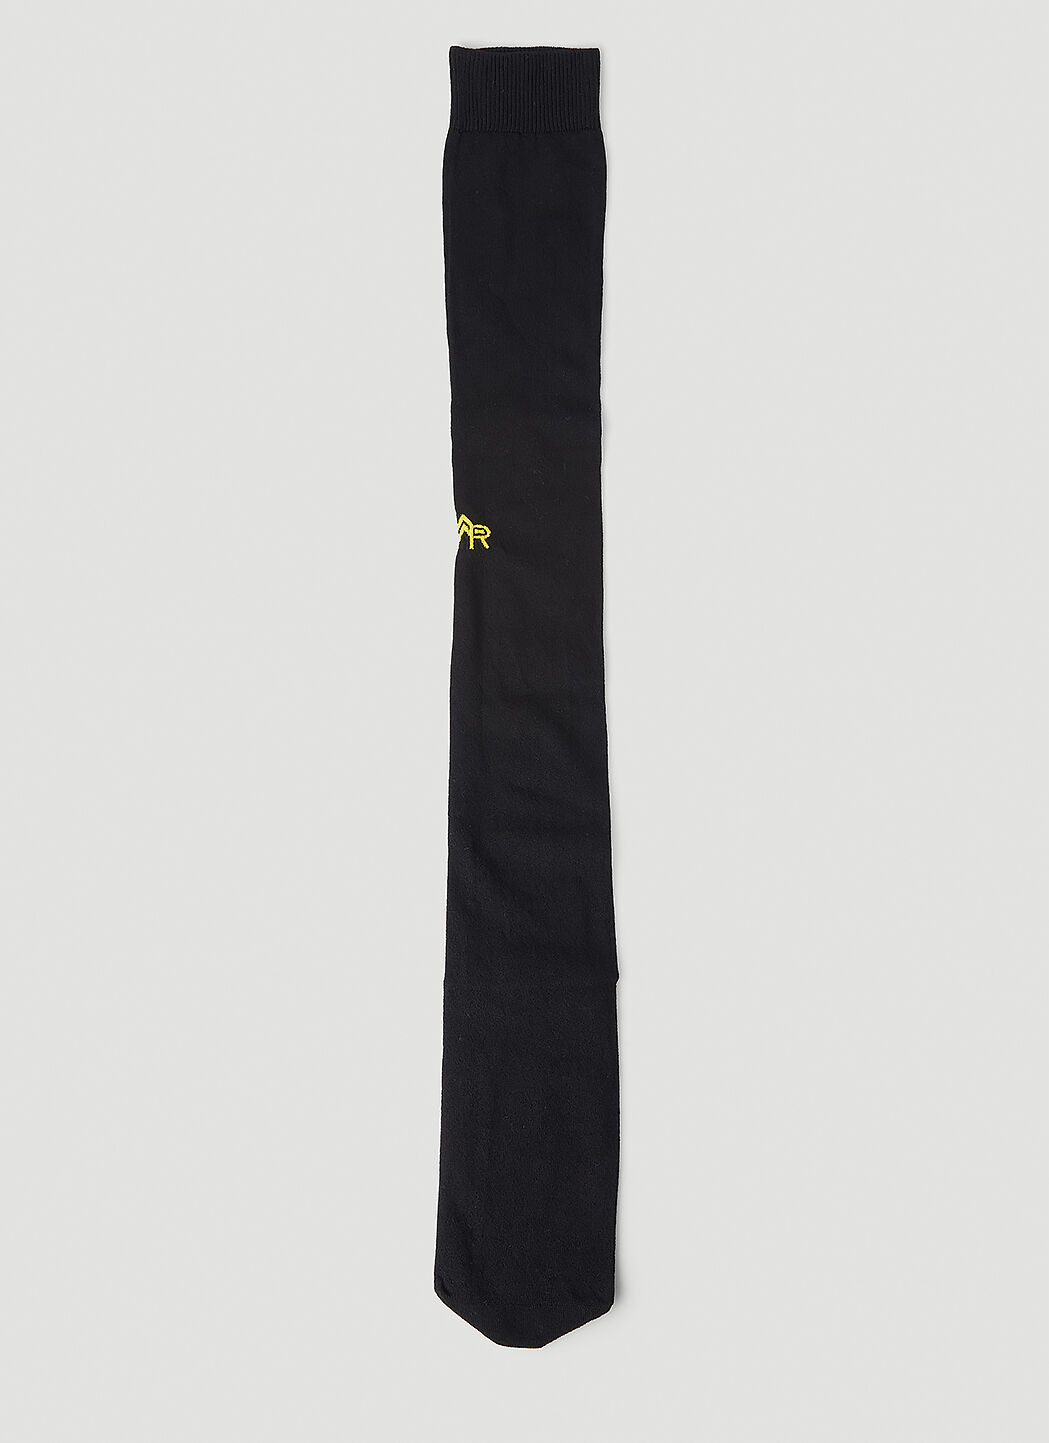 Meryll Rogge Logo Embroidered Long Socks Yellow rog0250007